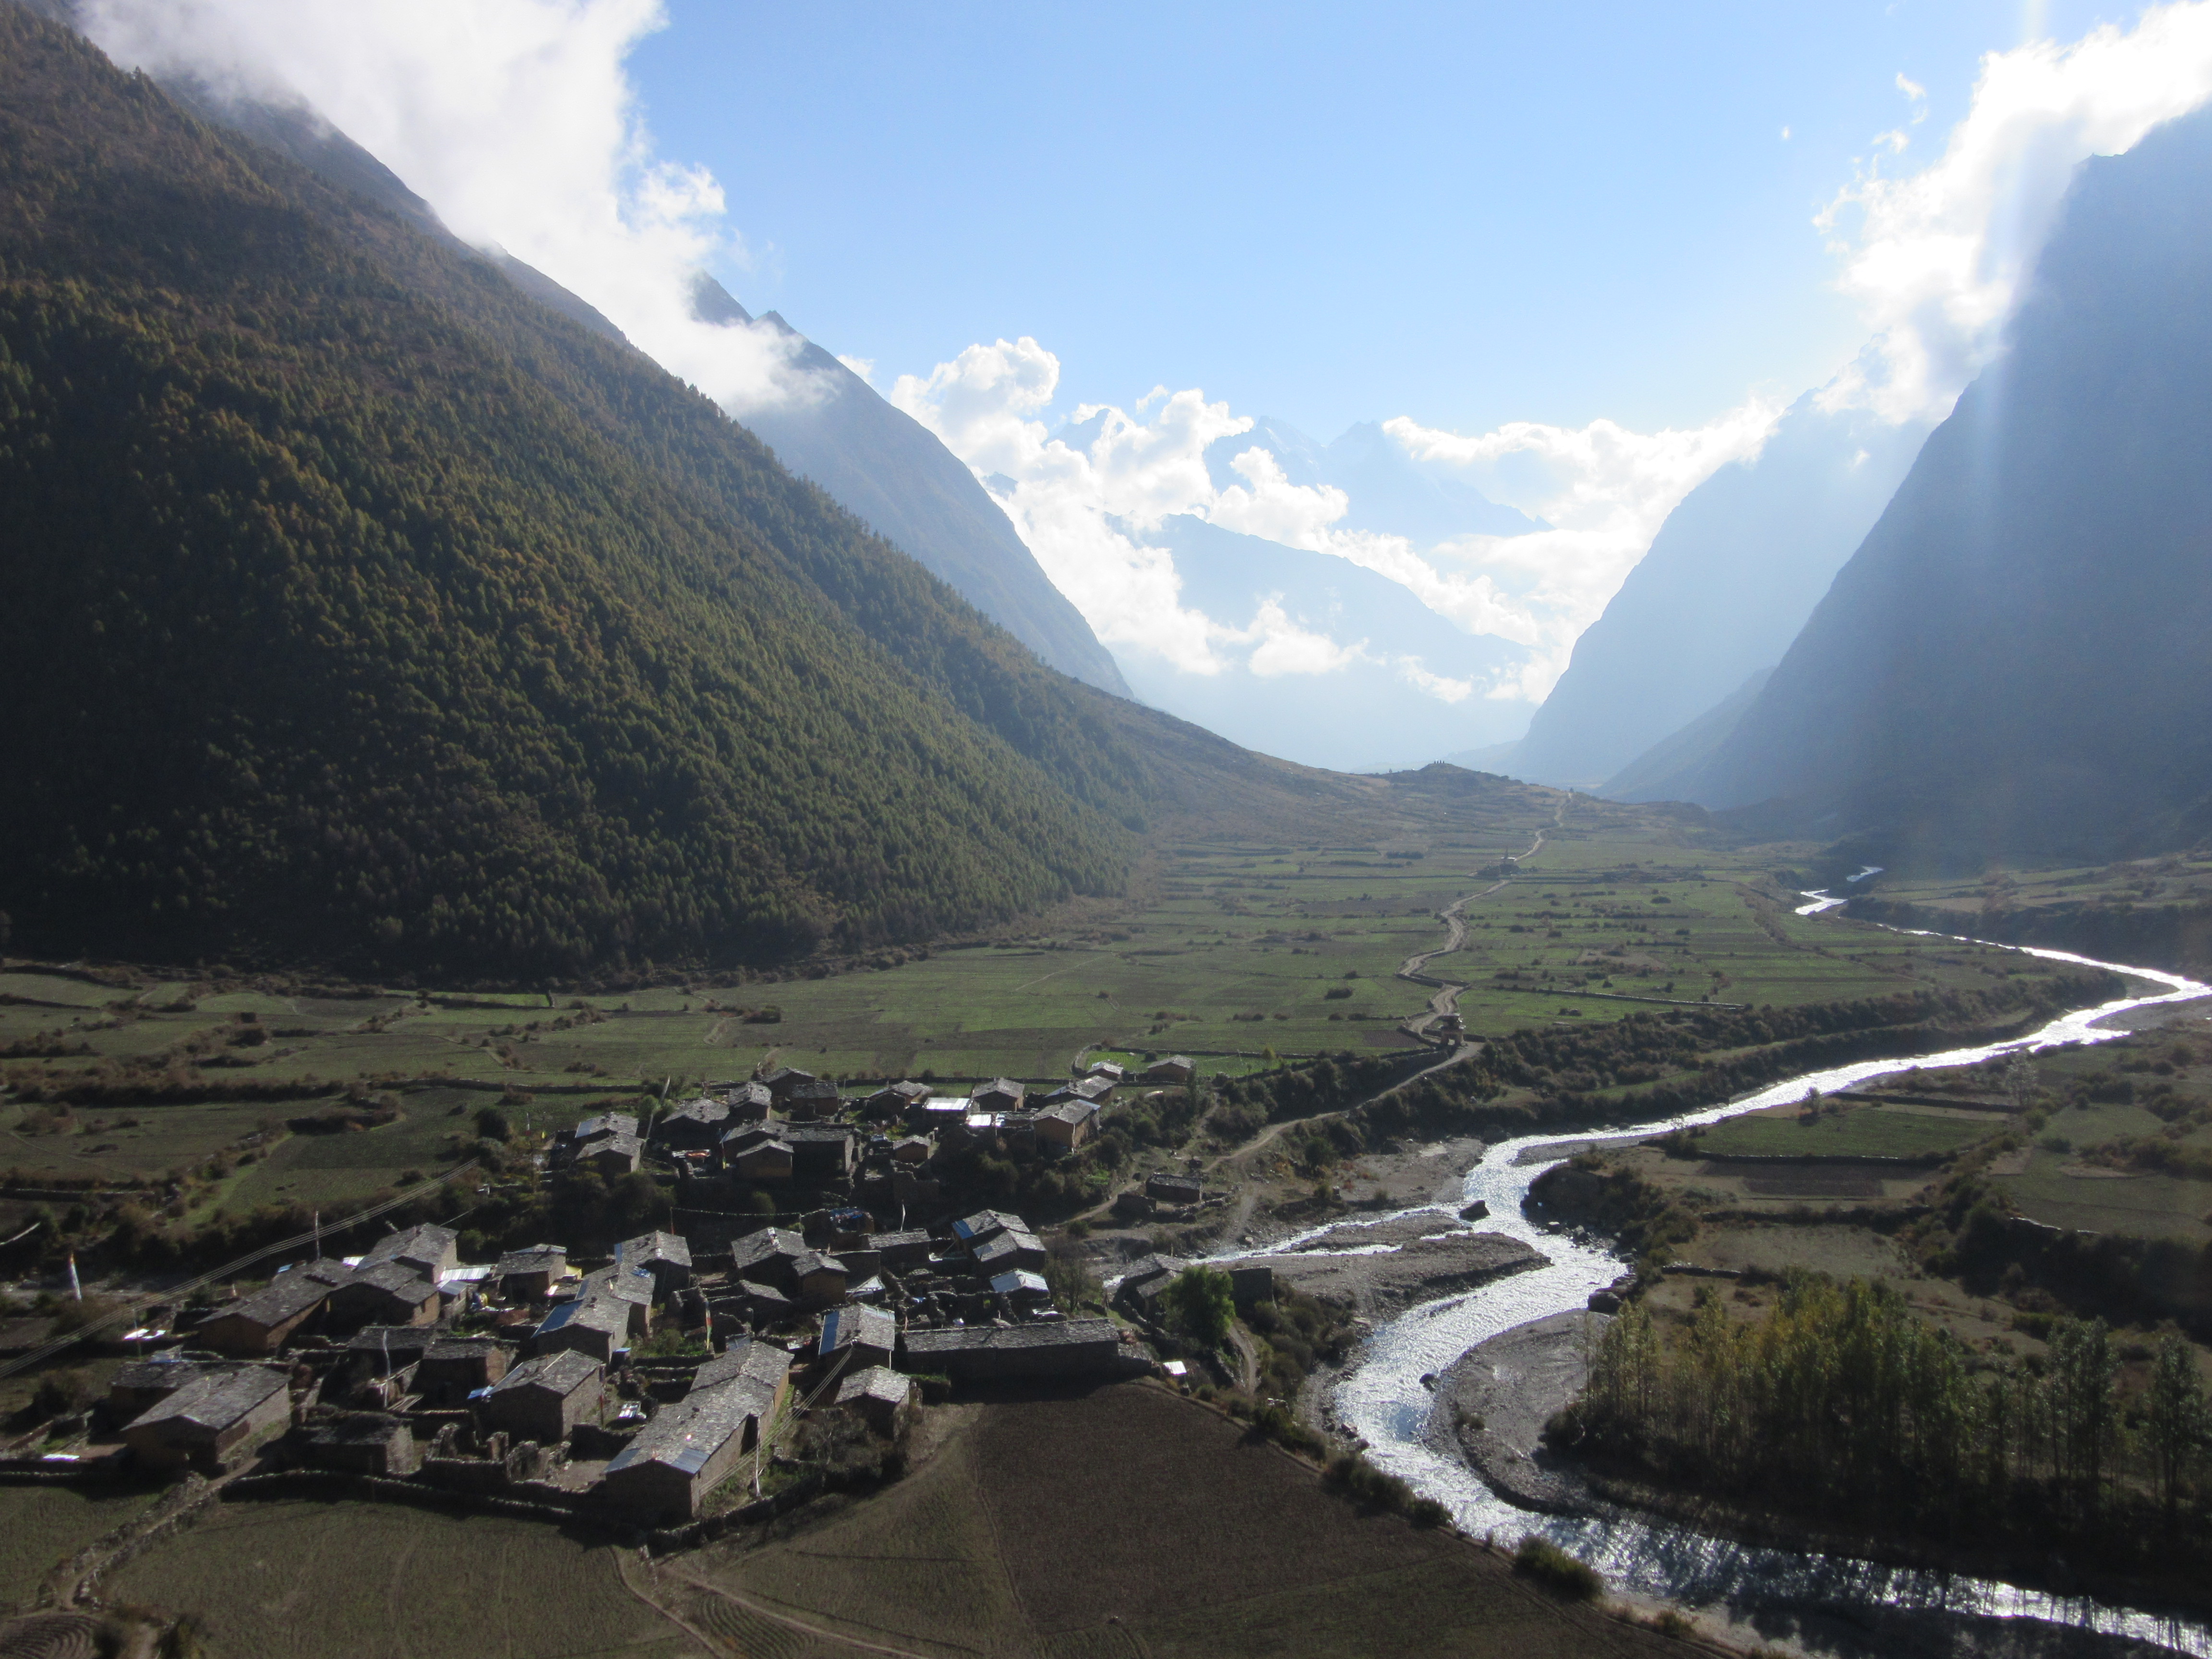 Tsum valley and manaslu trek